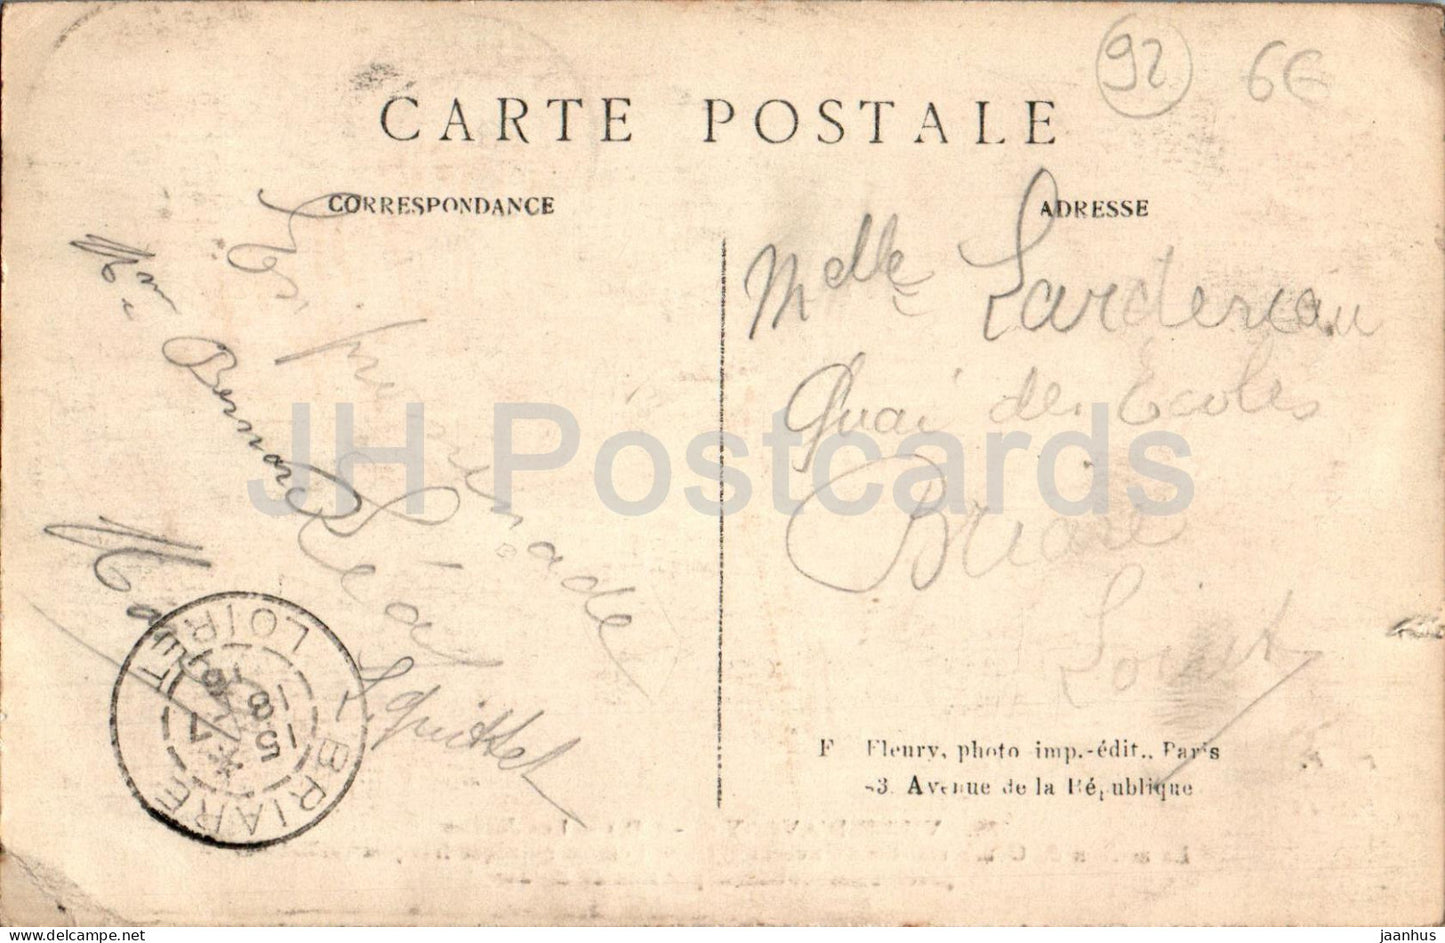 Ville D'Avray - Les Jardies - Honore de Balzac - 36 - alte Postkarte - 1916 - Frankreich - gebraucht 